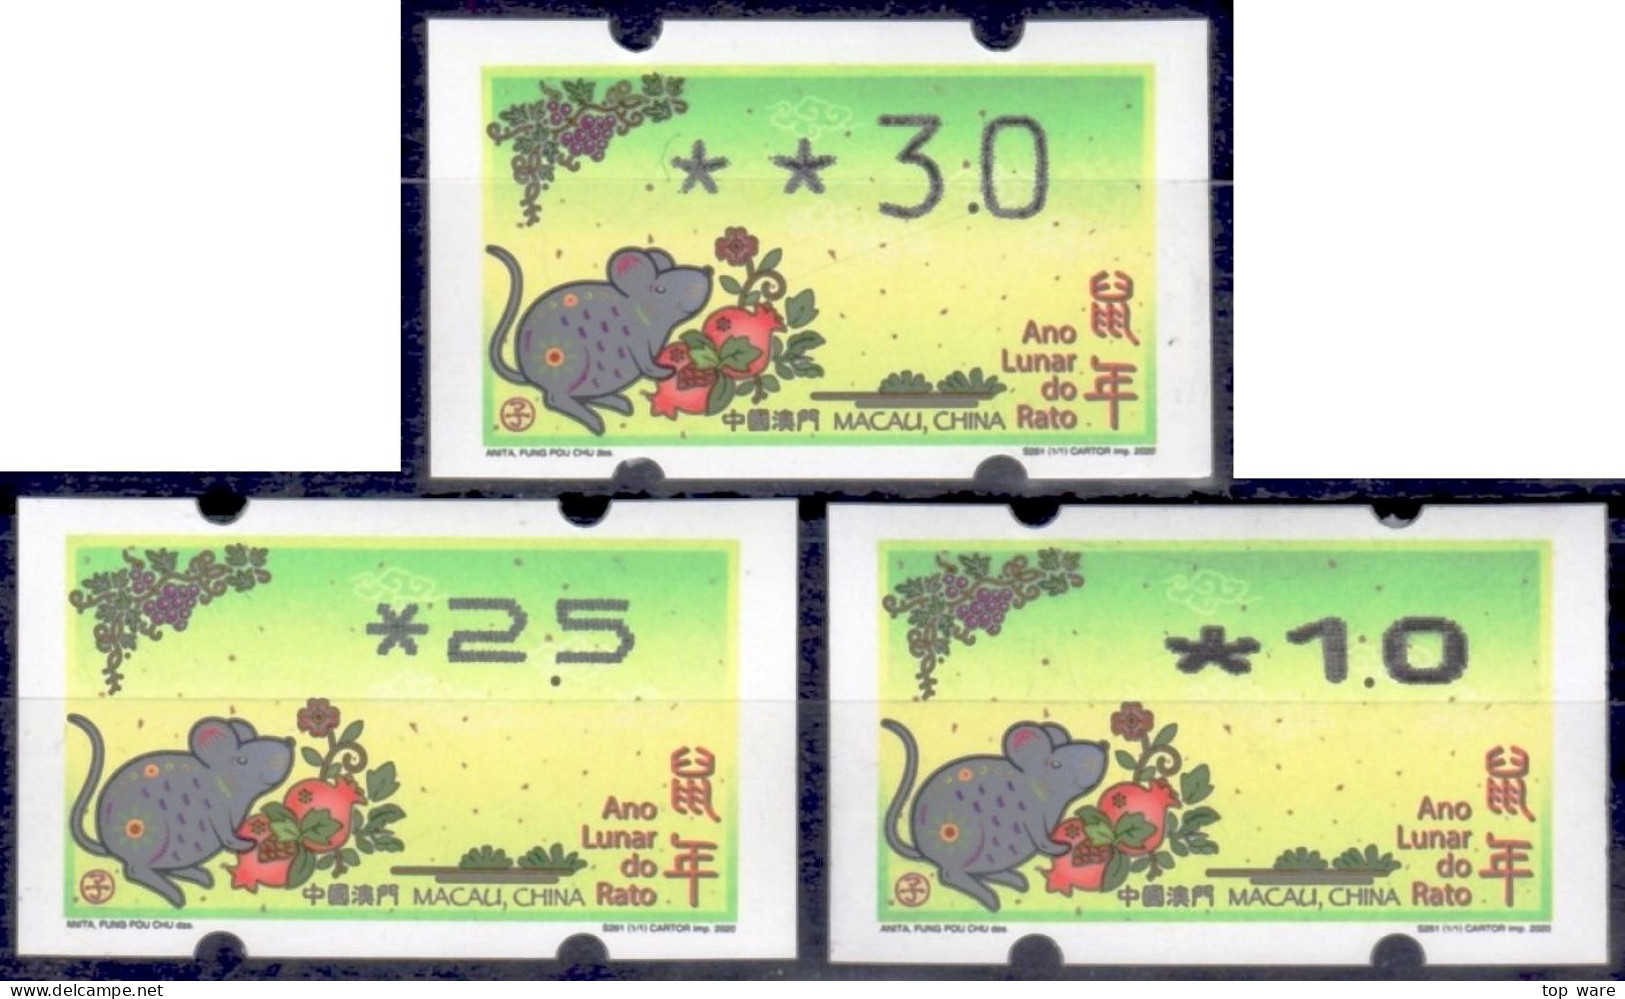 2020 China Macau ATM Stamps Ratte Maus Rat / Alle Drei Typen Klussendorf Nagler Newvision Automatenmarken Automatici - Distributors